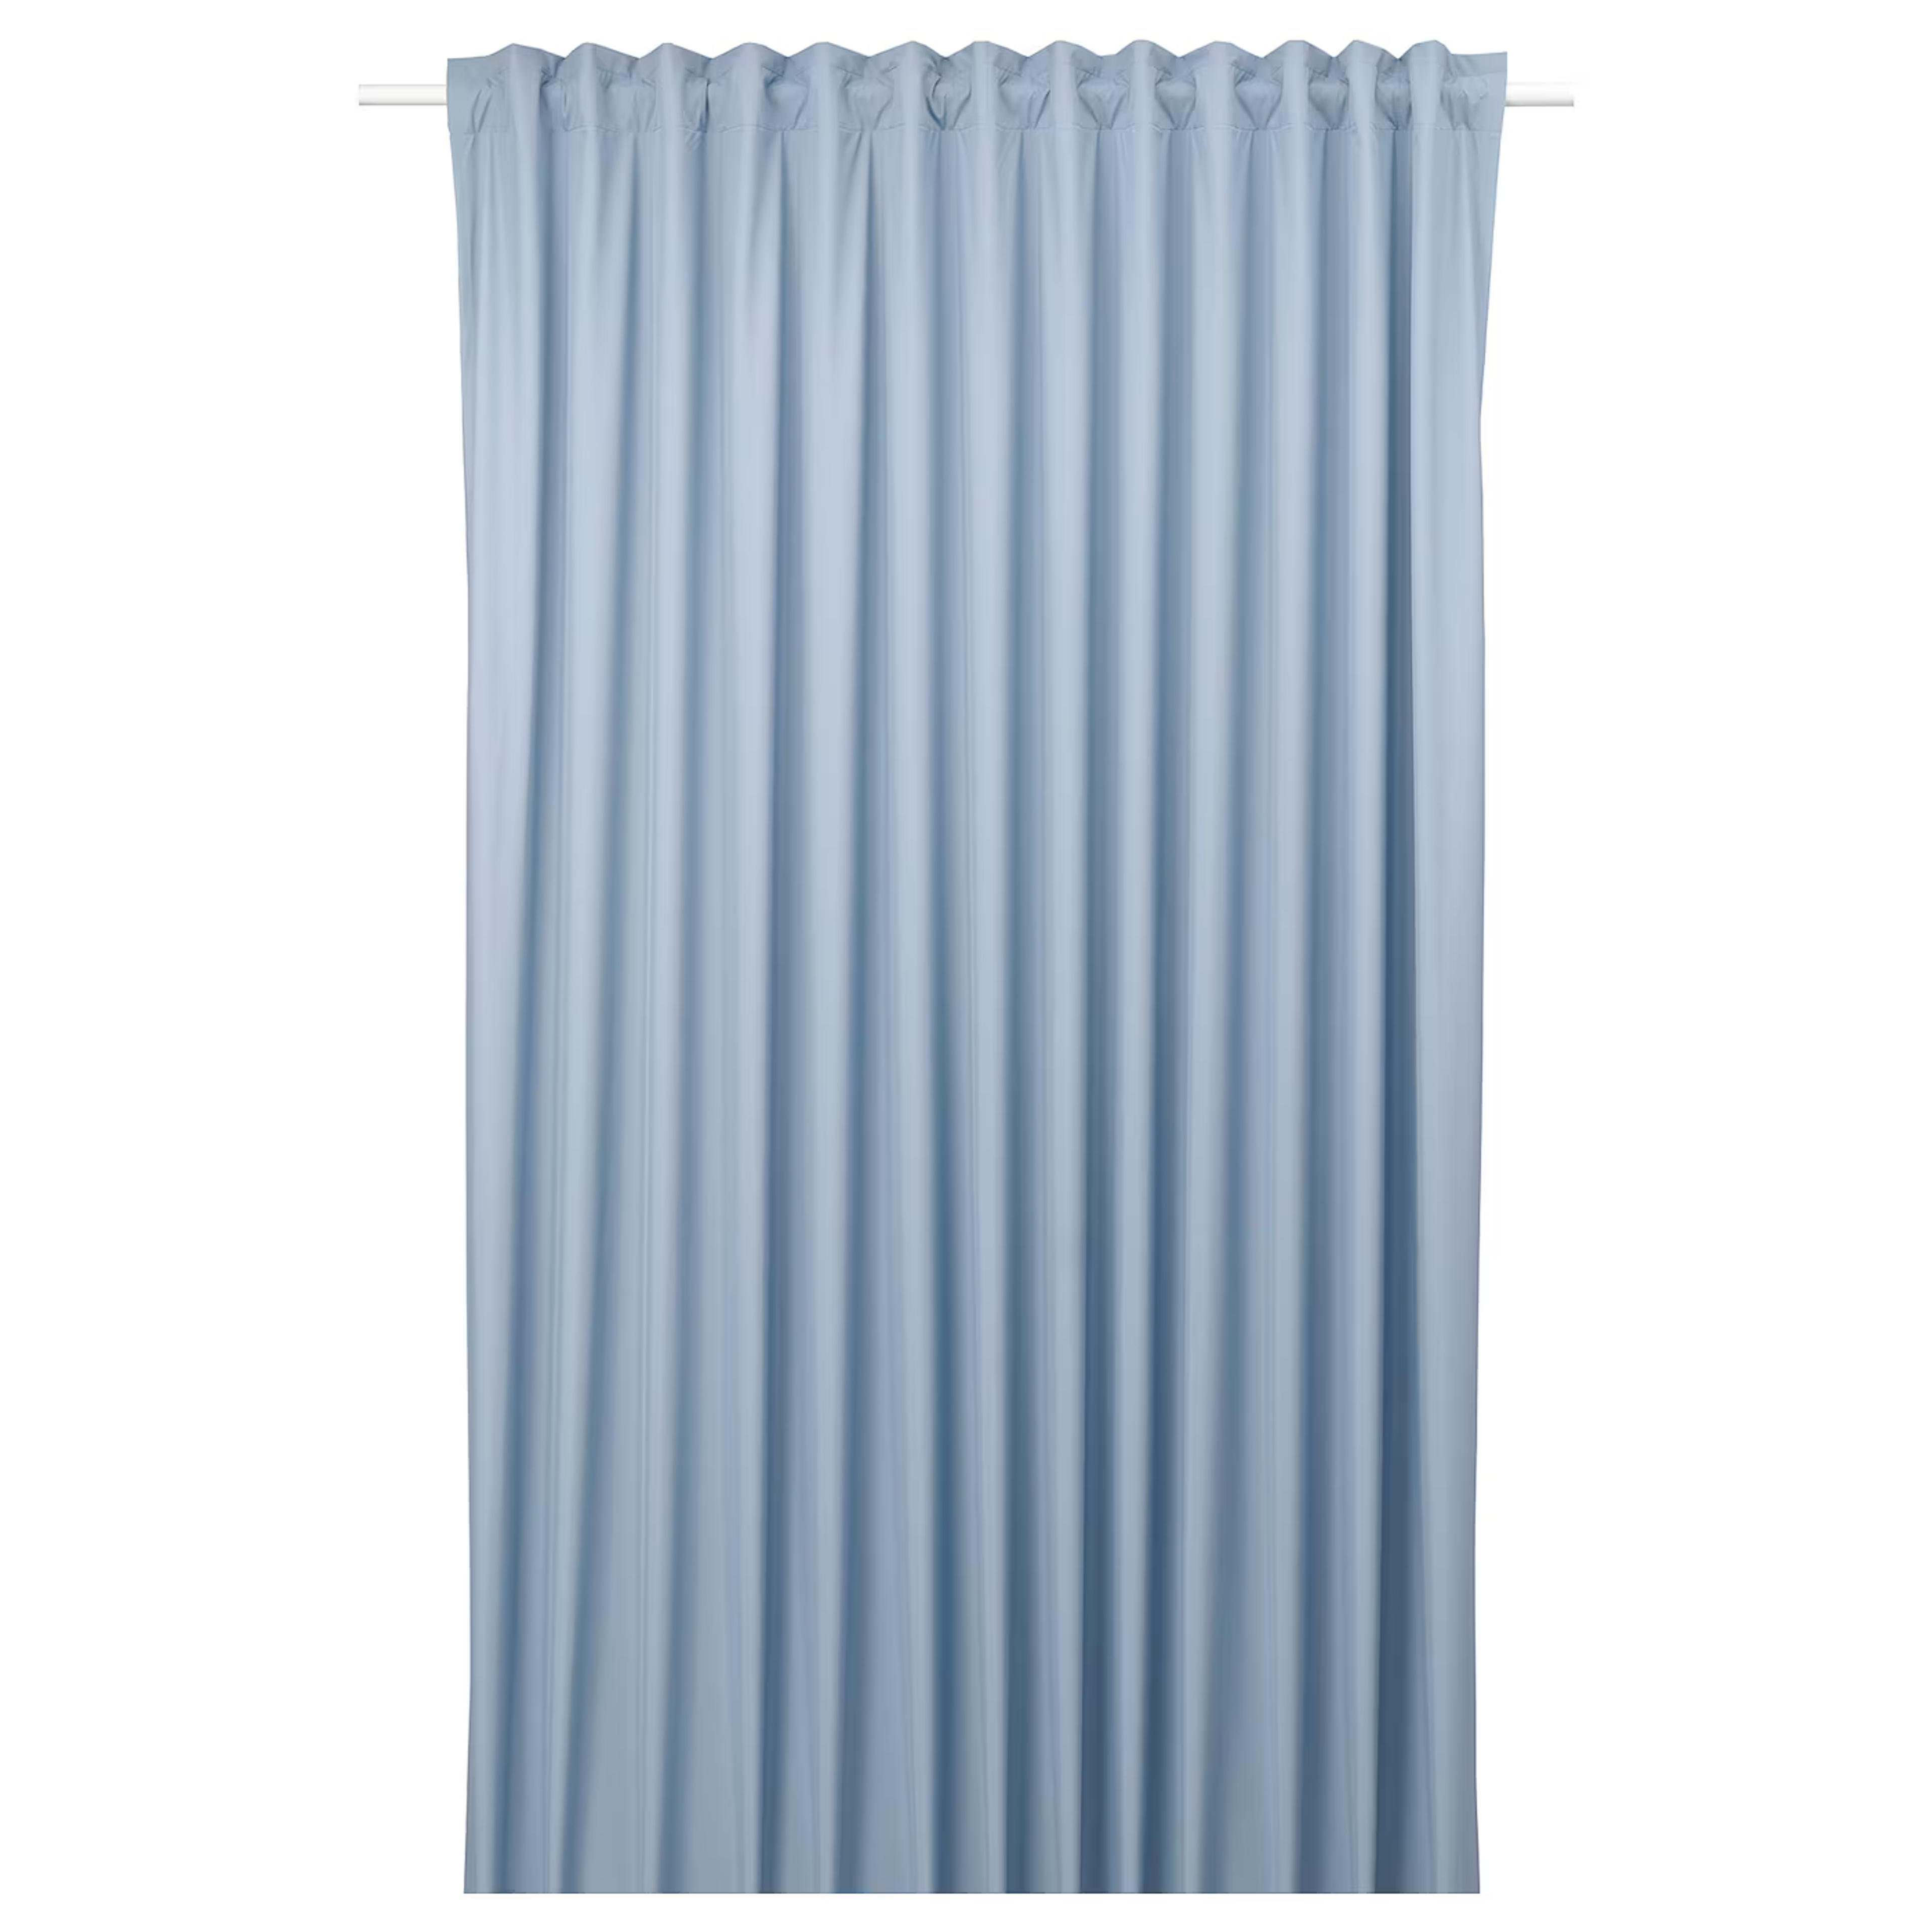 BENGTA - black-out curtain, 1 length, blue